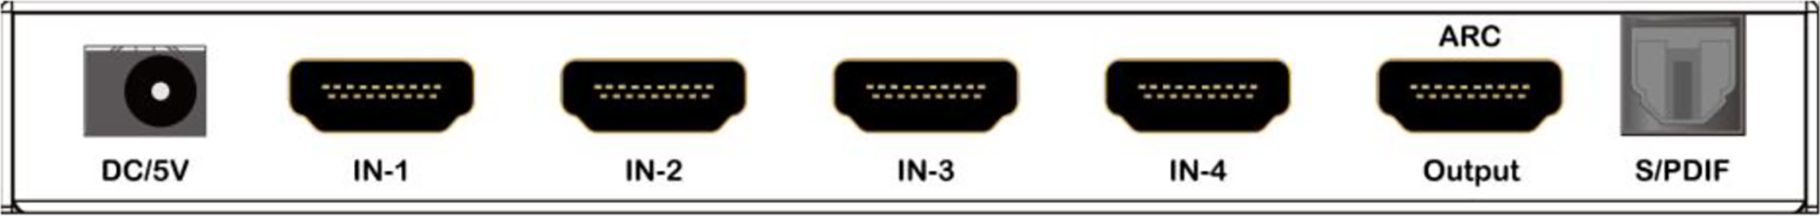 HDMI4S18GV2 Back Panel